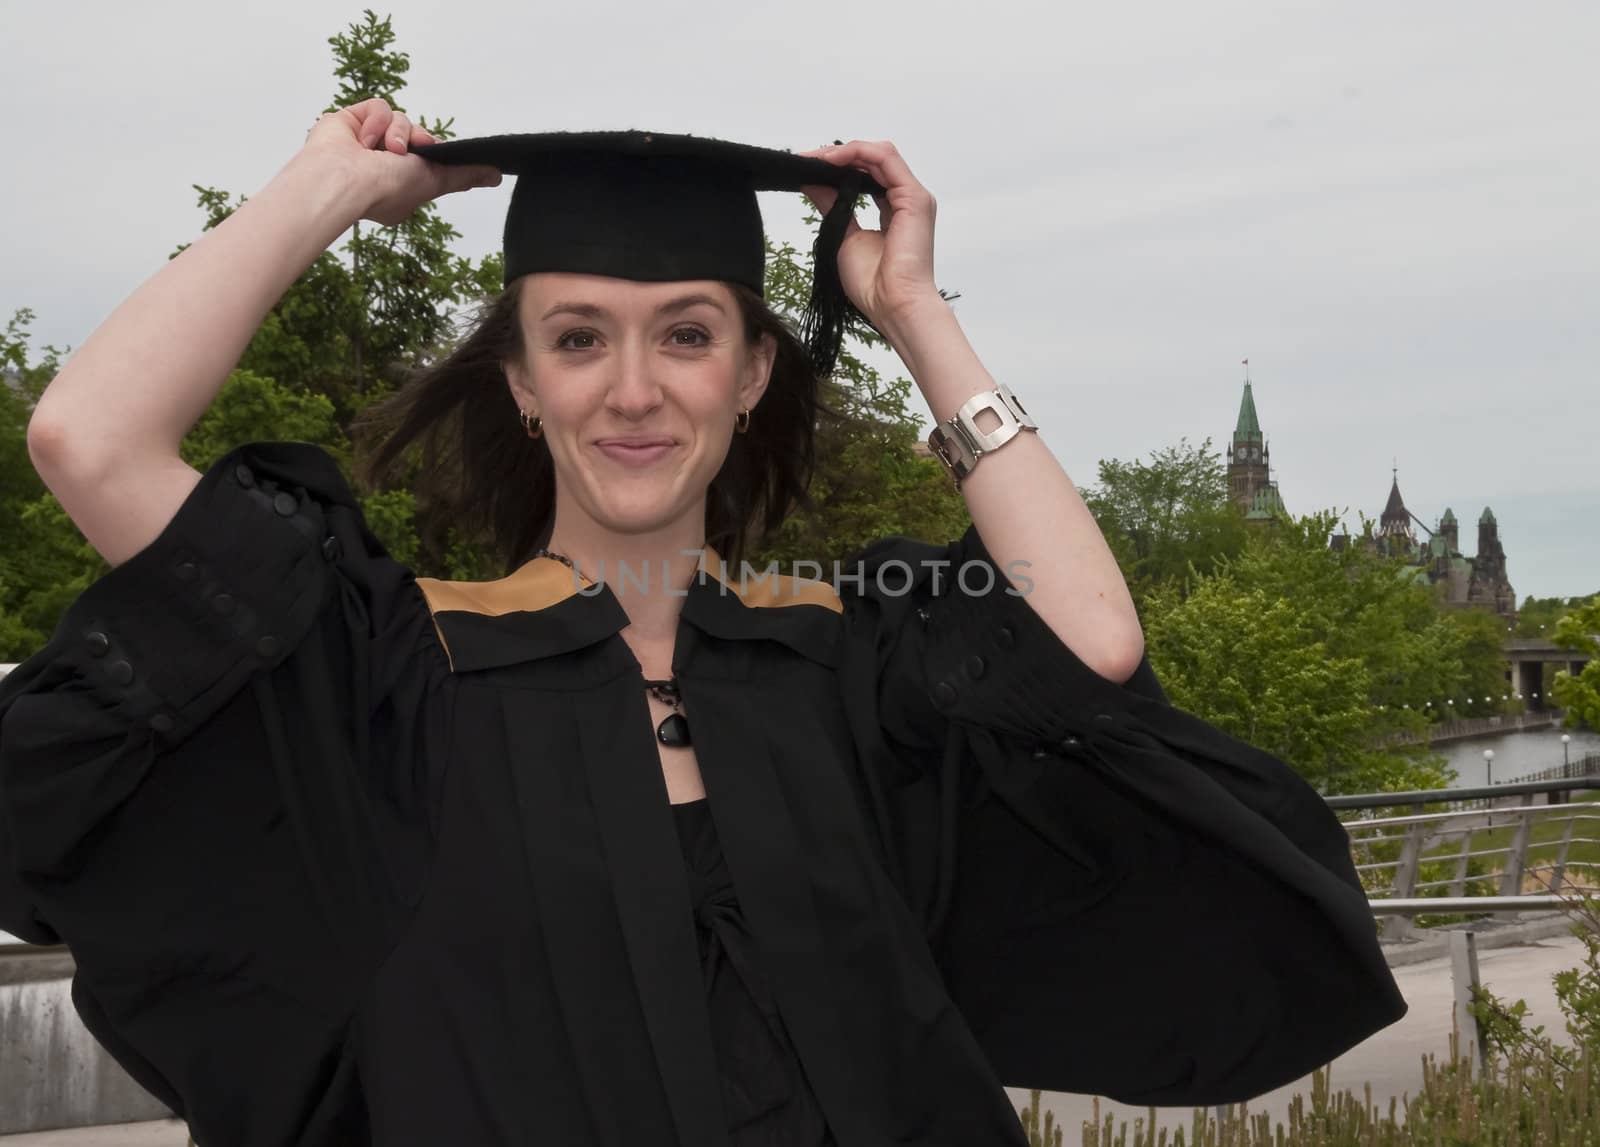 Graduation Pose by michelloiselle